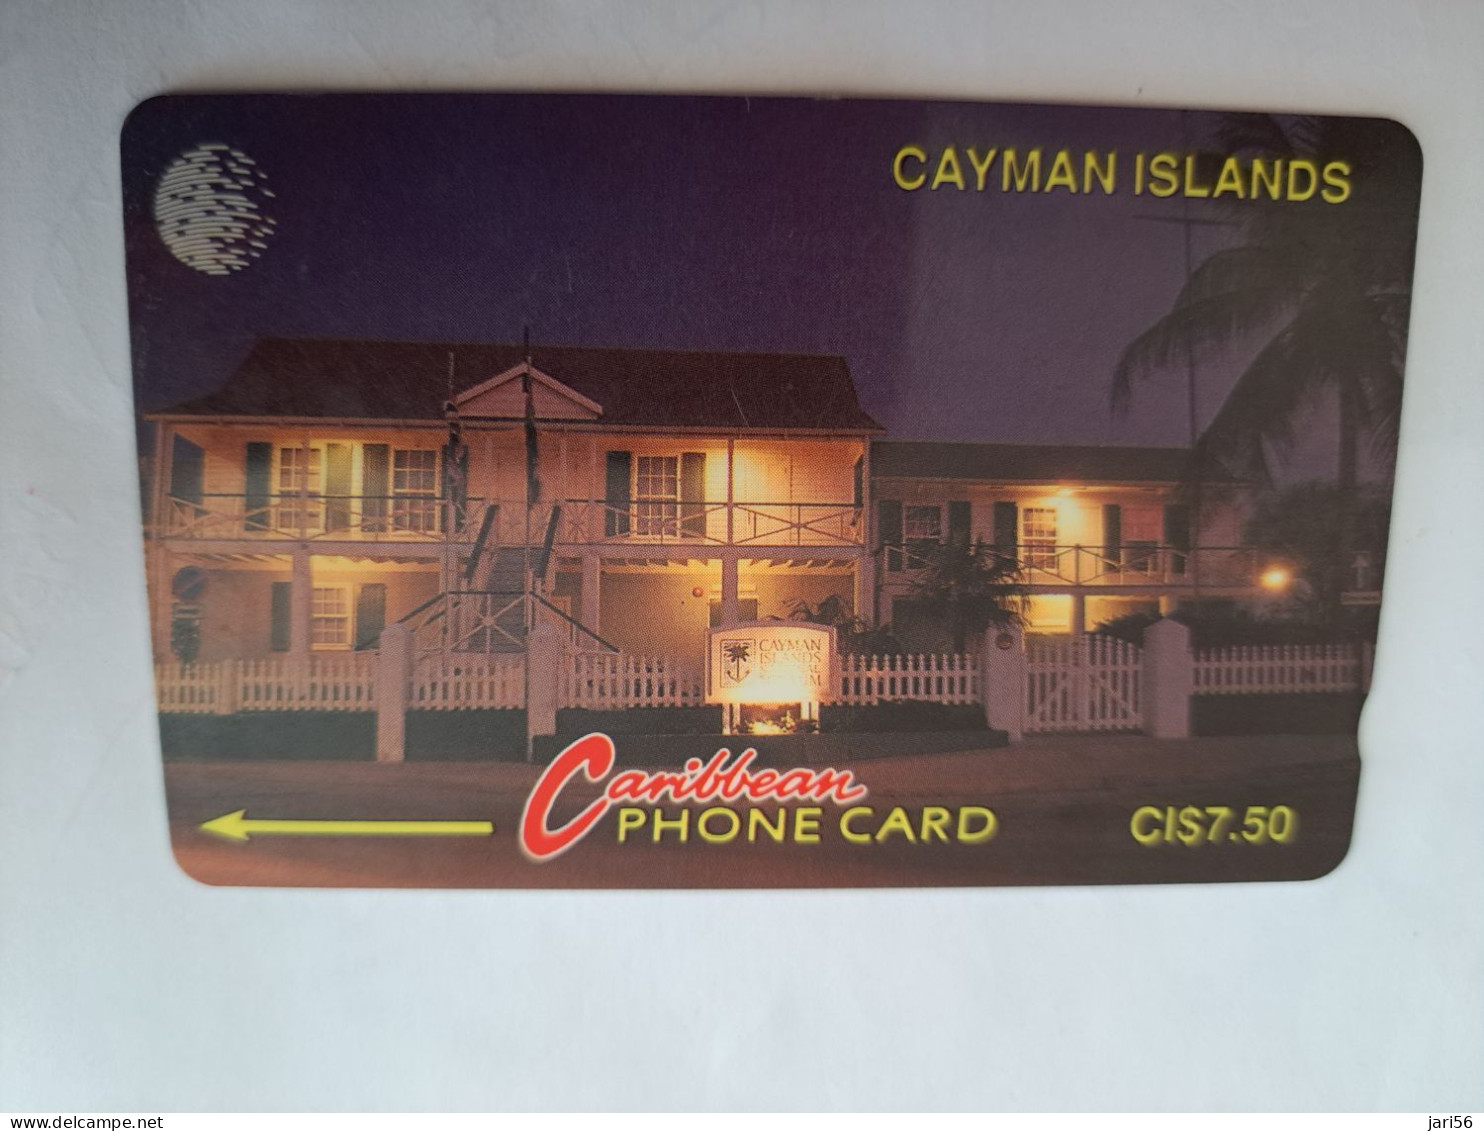 CAYMAN ISLANDS  CI $ 7,50  CAY-6C  CONTROL NR 6CCIC/SILVER/  MUSEUM AT NIGHT    NEW  LOGO     Fine Used Card  ** 14175** - Iles Cayman